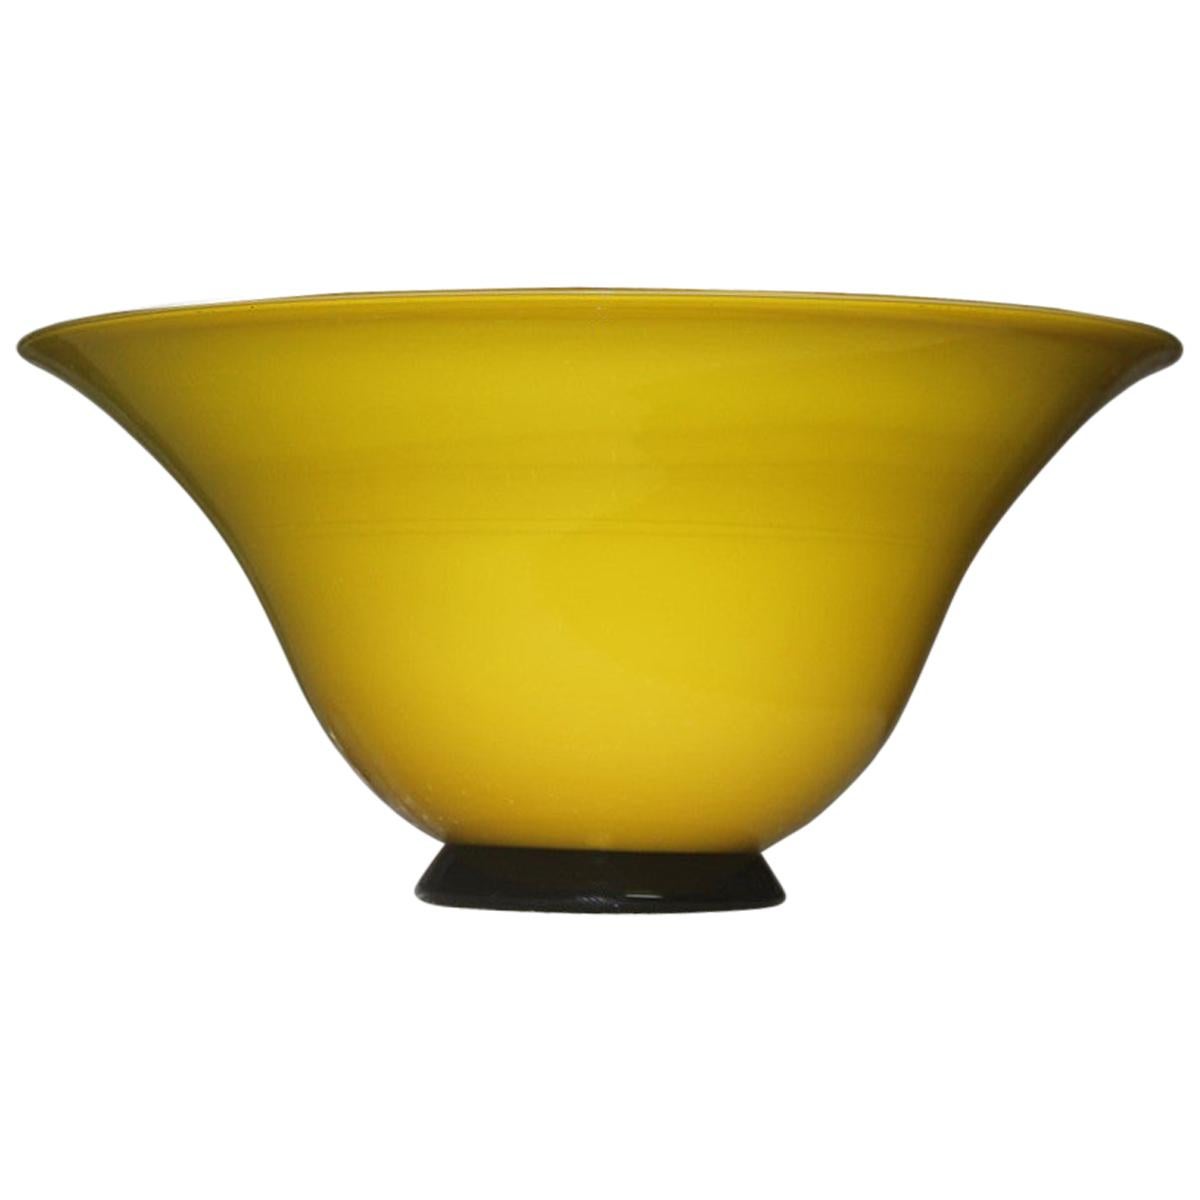 Murano Glass Cup Vase Yellow Black 1989 Mendini Attributed Italian Design For Sale